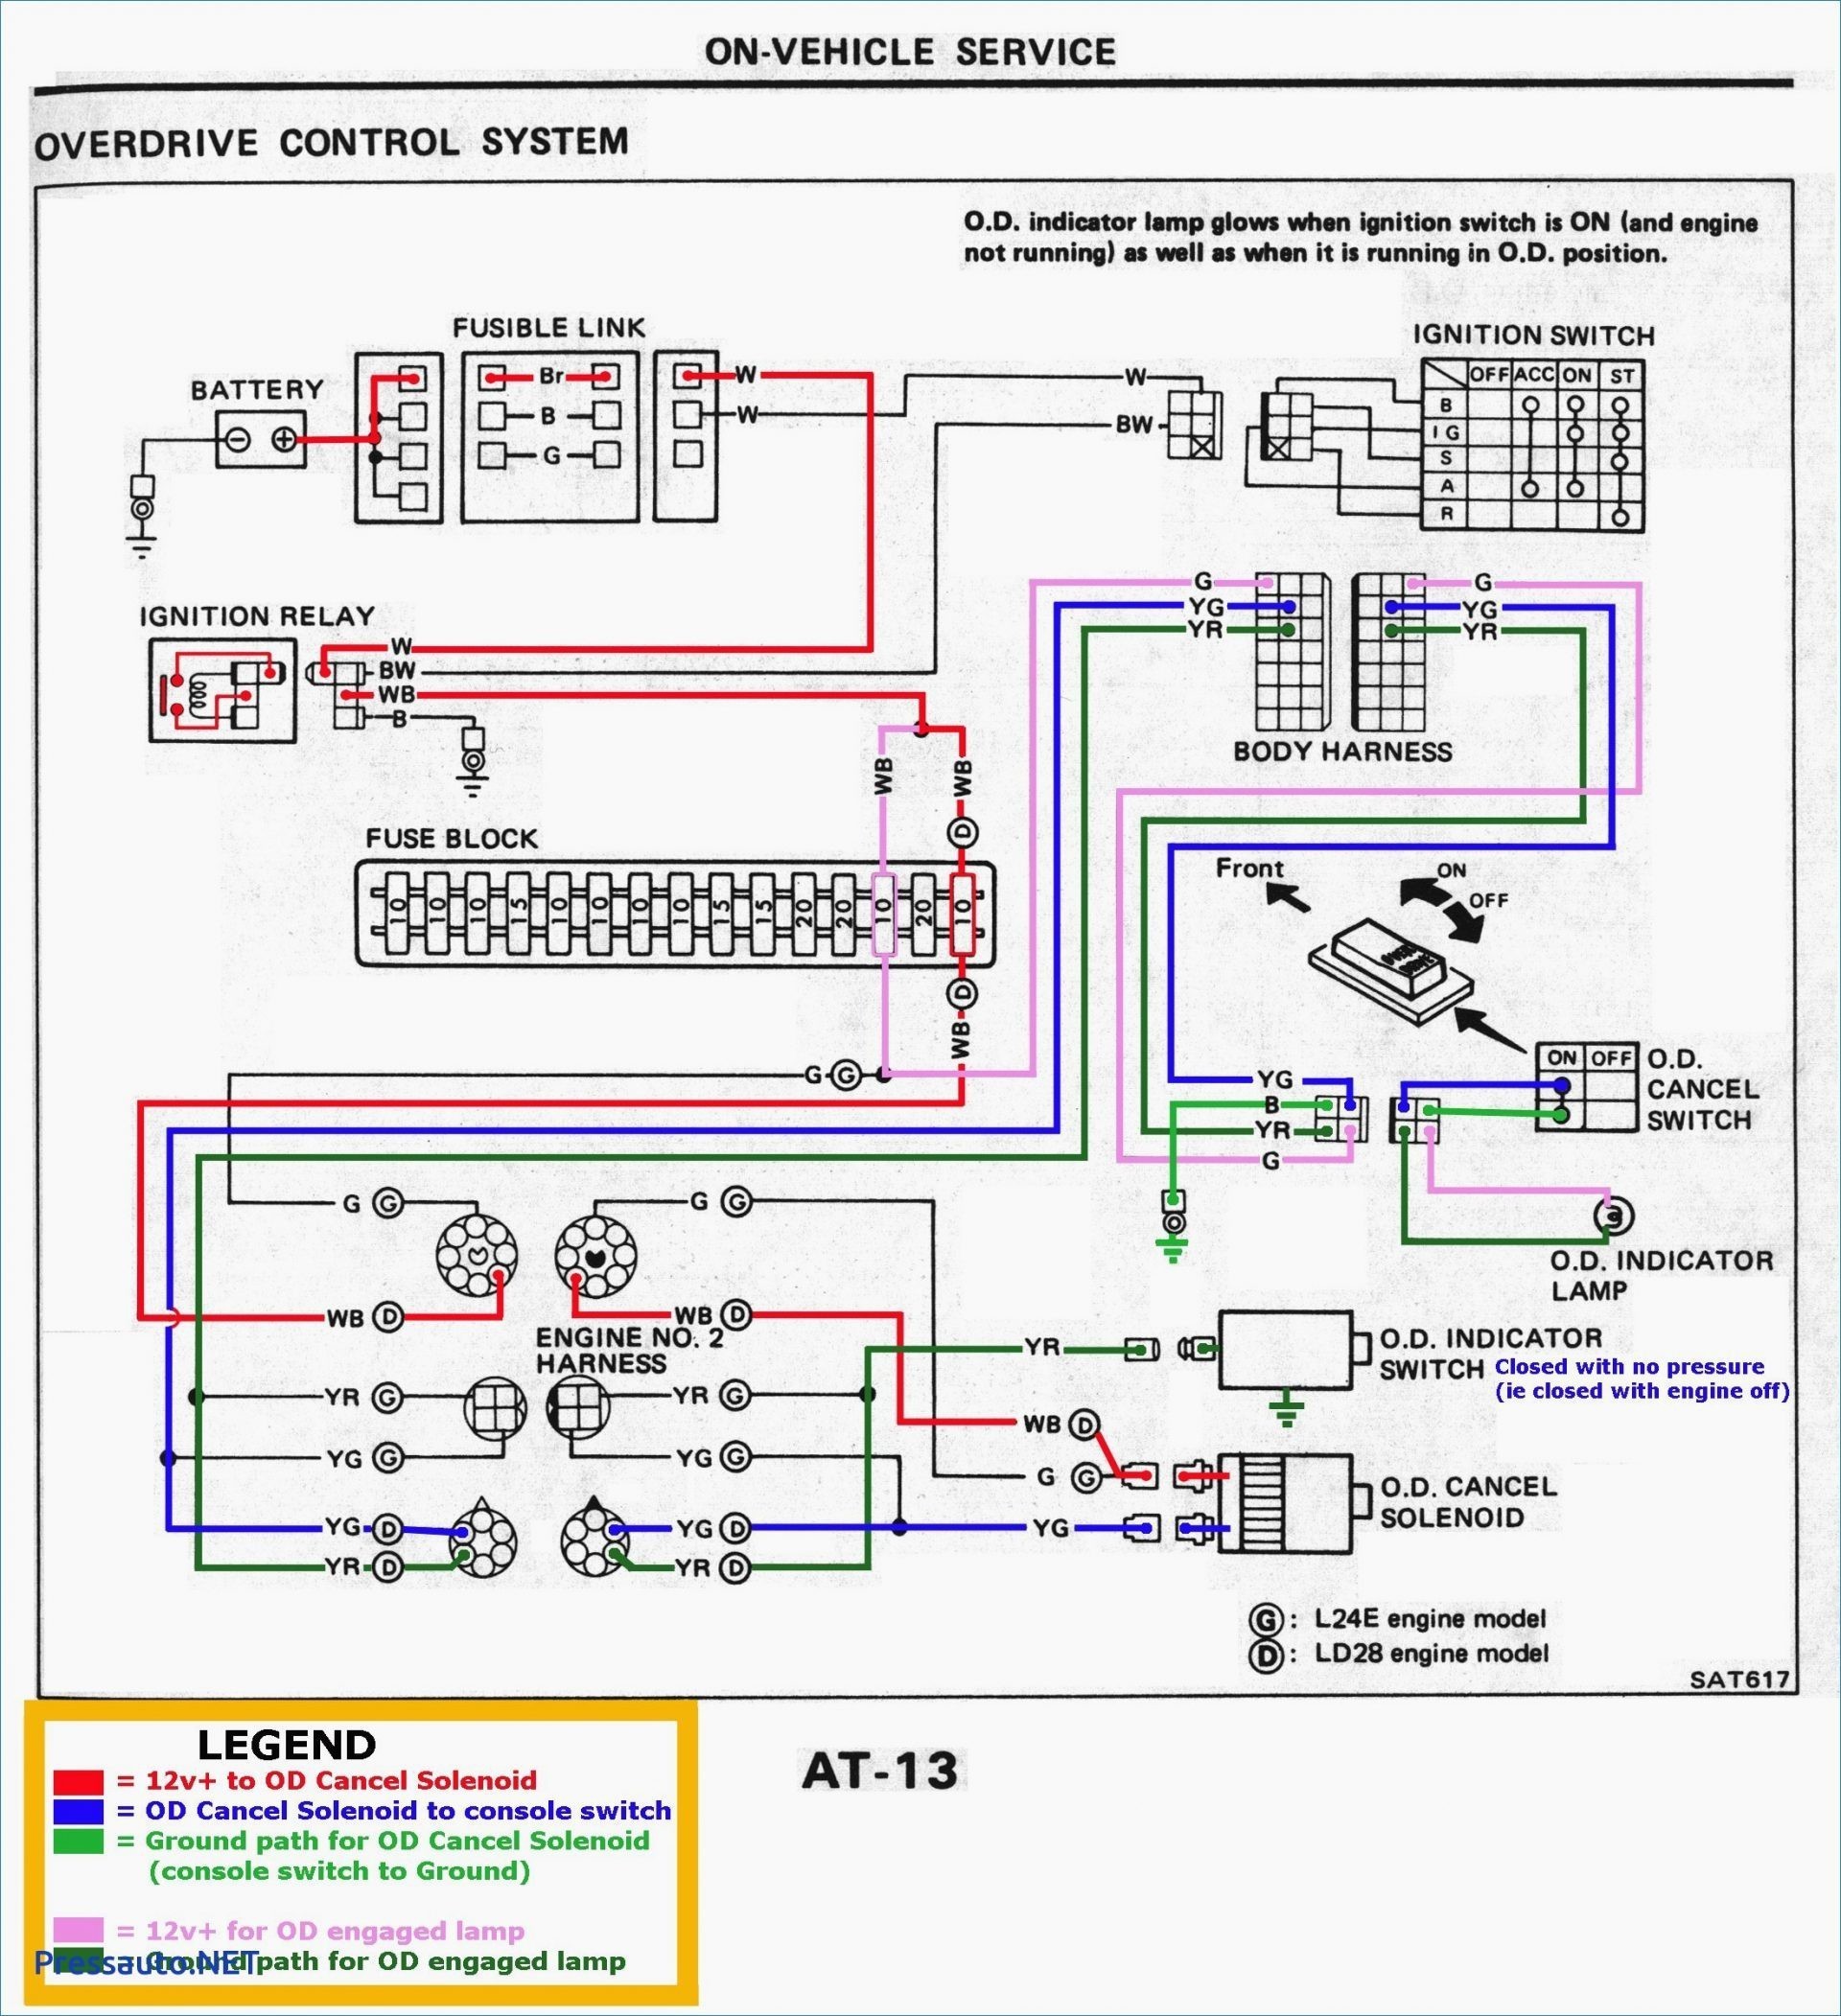 Wiring Diagram for Caravan Inverter Save 30 Amp Rv Service Wiring Image – Wiring Diagram Collection